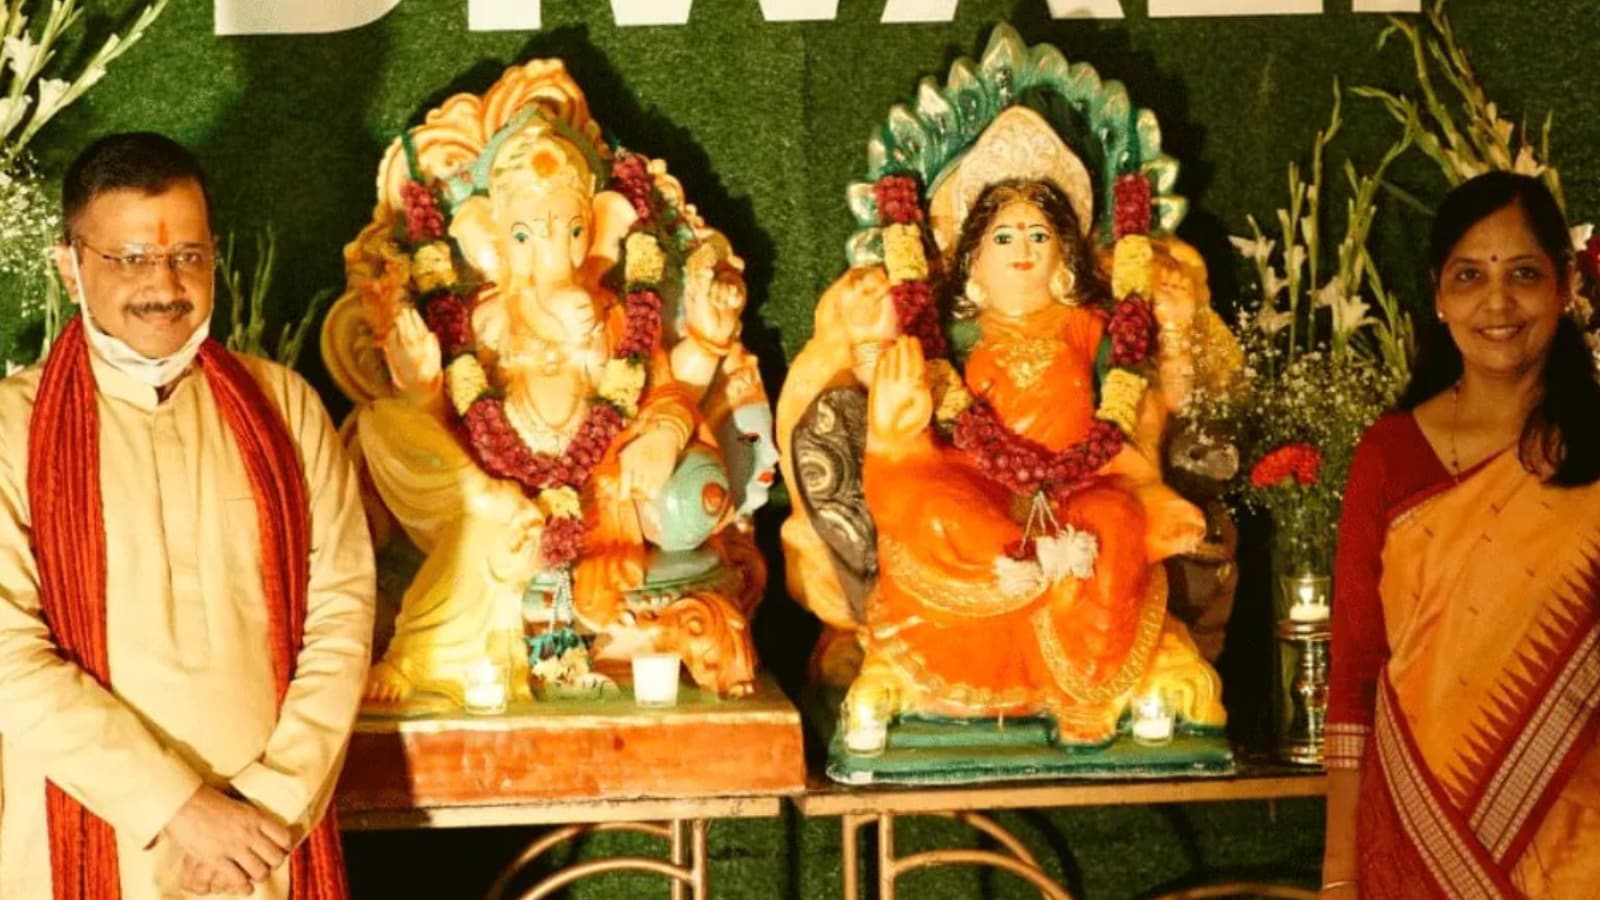 will-kejriwal-s-lakshmi-ganesh-currency-demand-bring-prosperity-to-aap-in-guj-hp-news18-decodes